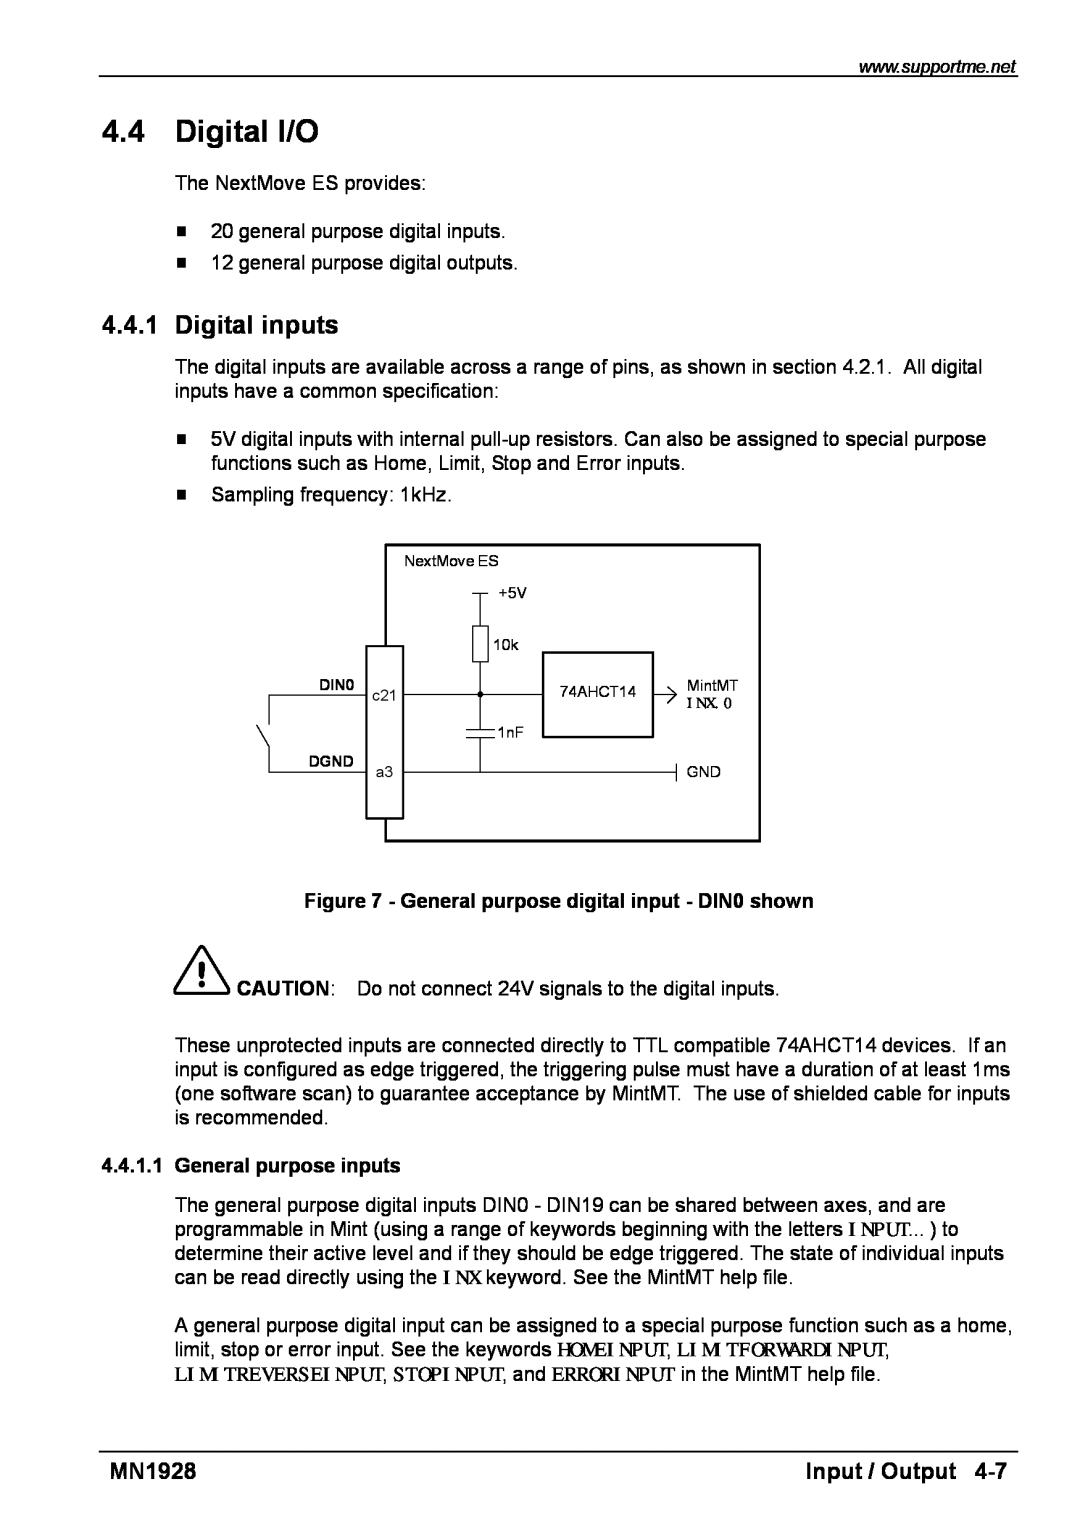 Baldor MN1928 installation manual Digital I/O, Digital inputs, Input / Output, General purpose digital input - DIN0 shown 